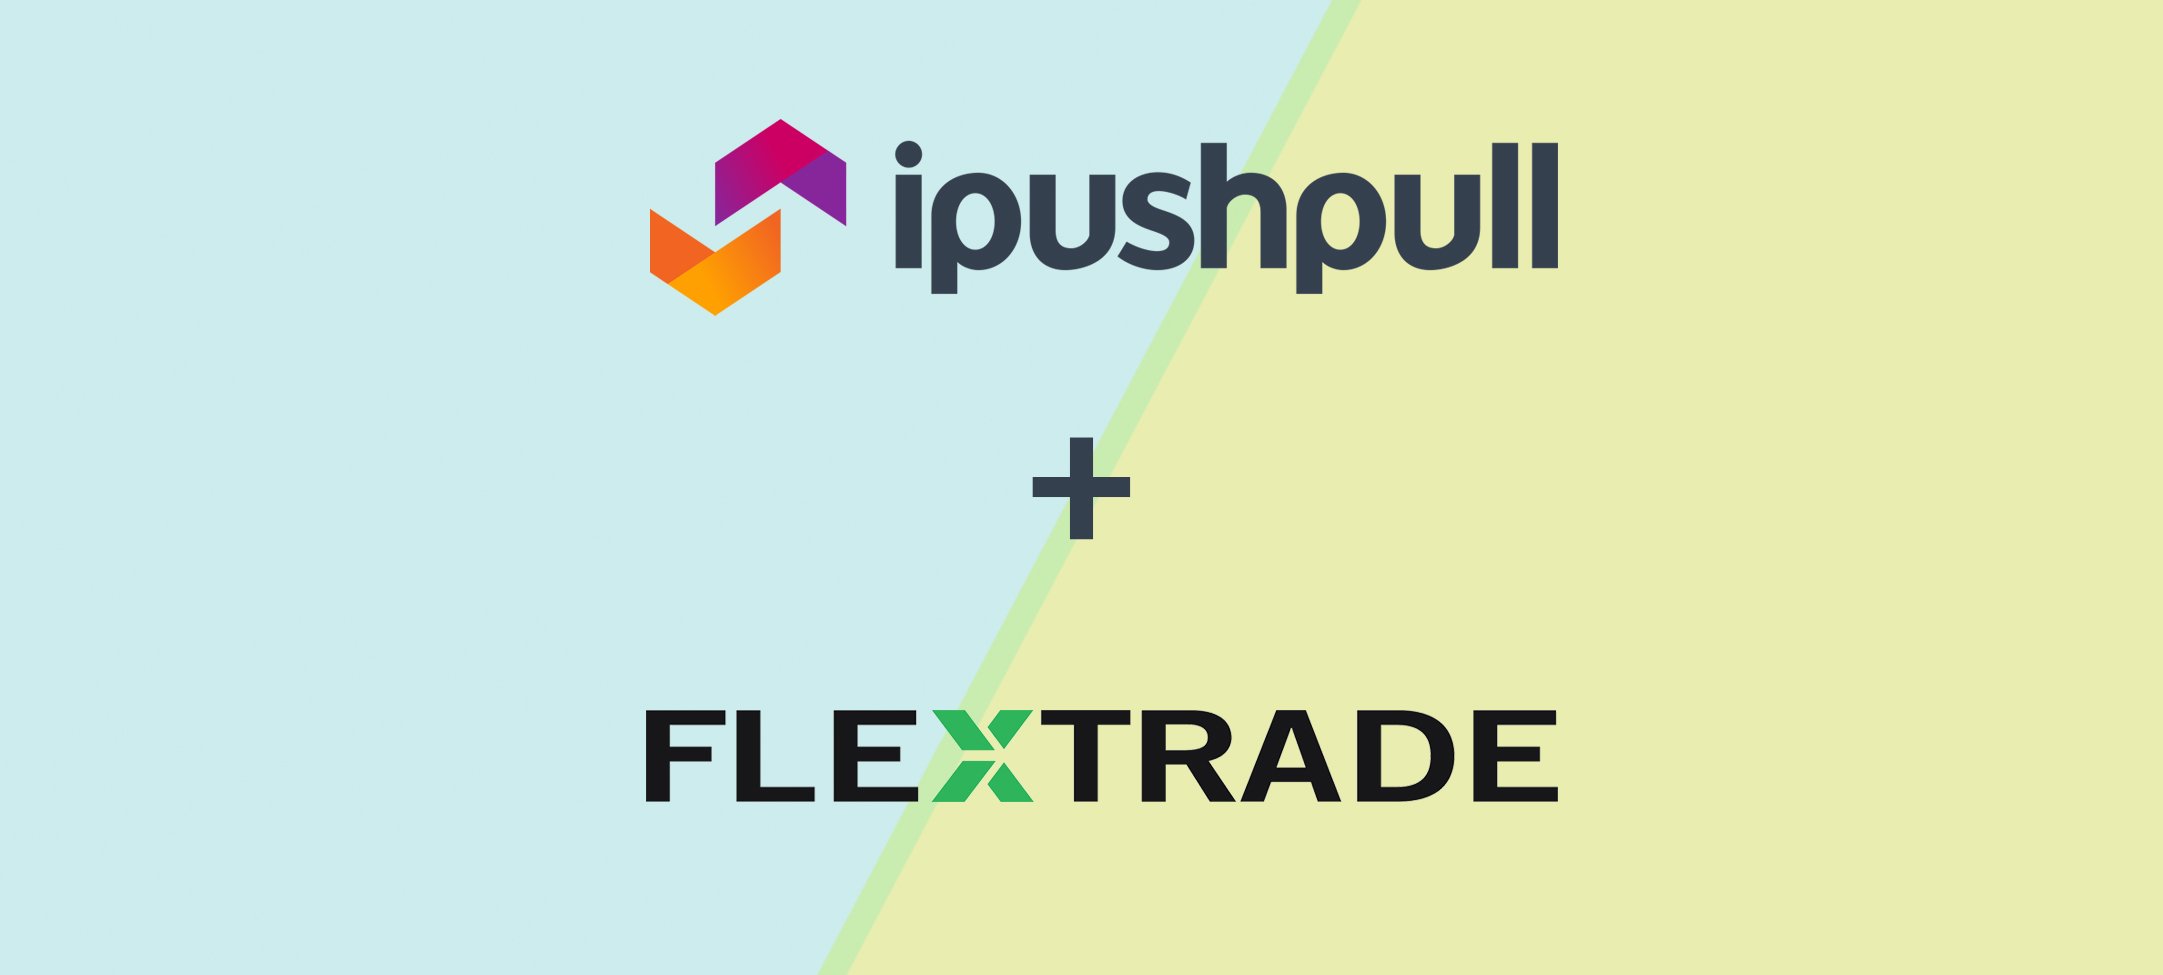 FlexTrade integrates ipushpull into the FlexNOW EMS